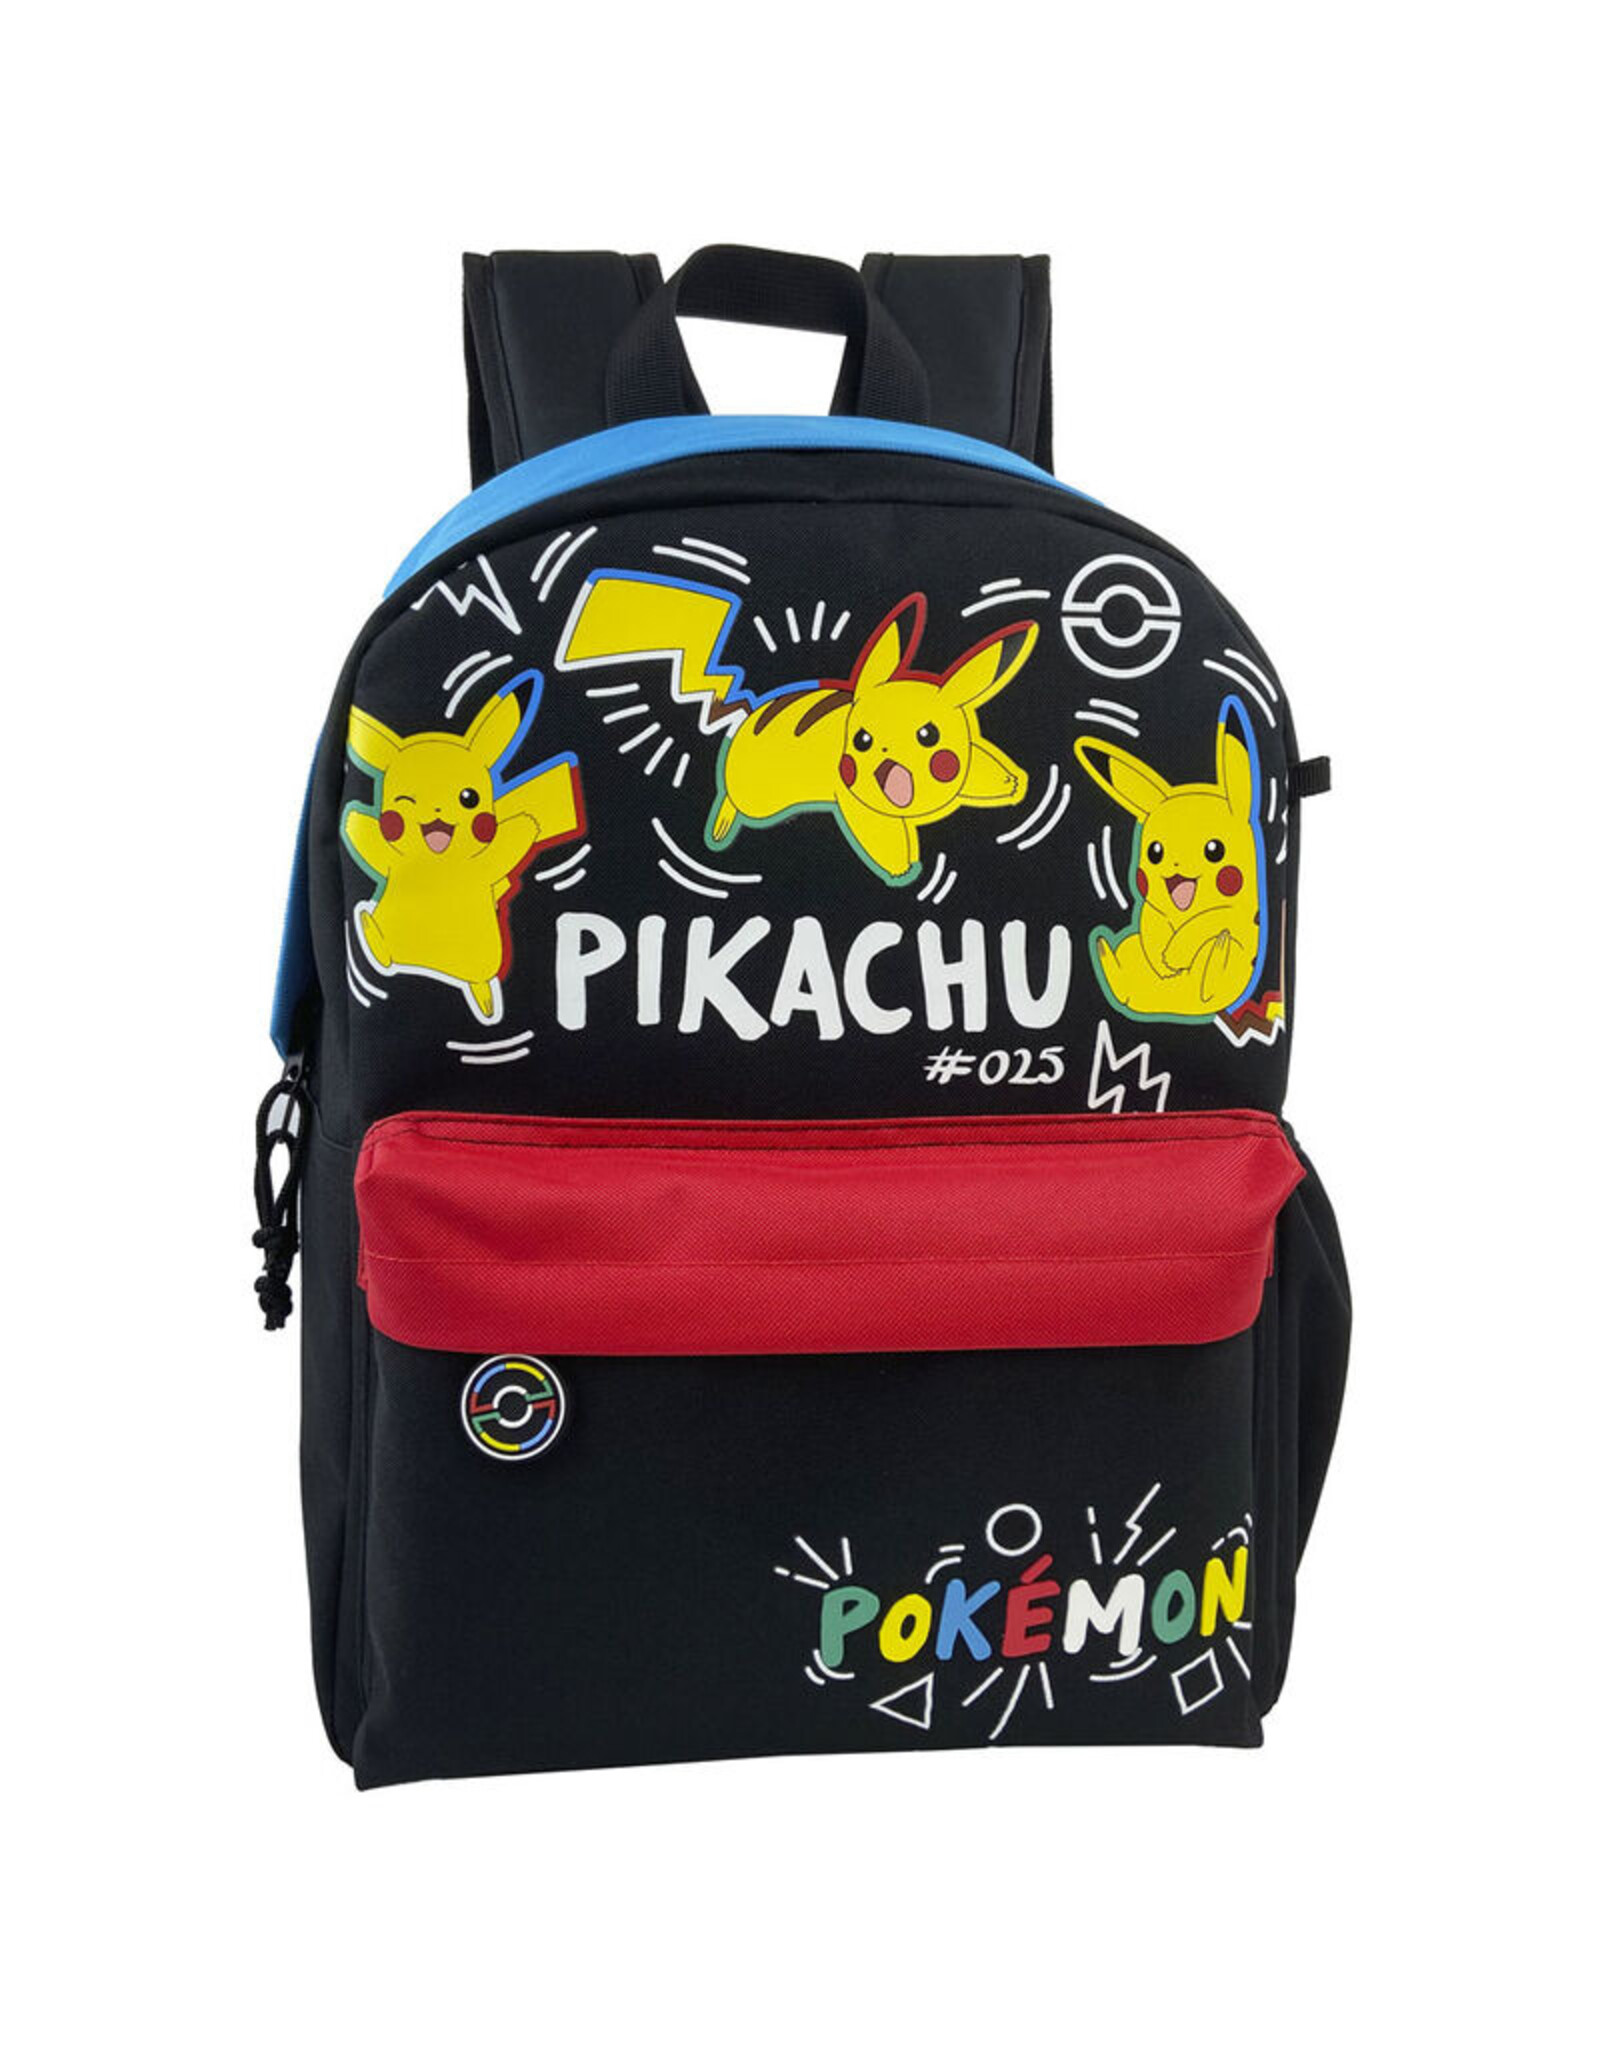 Pokemon Merchandise bags - Pokemon Pikachu Backpack 40cm